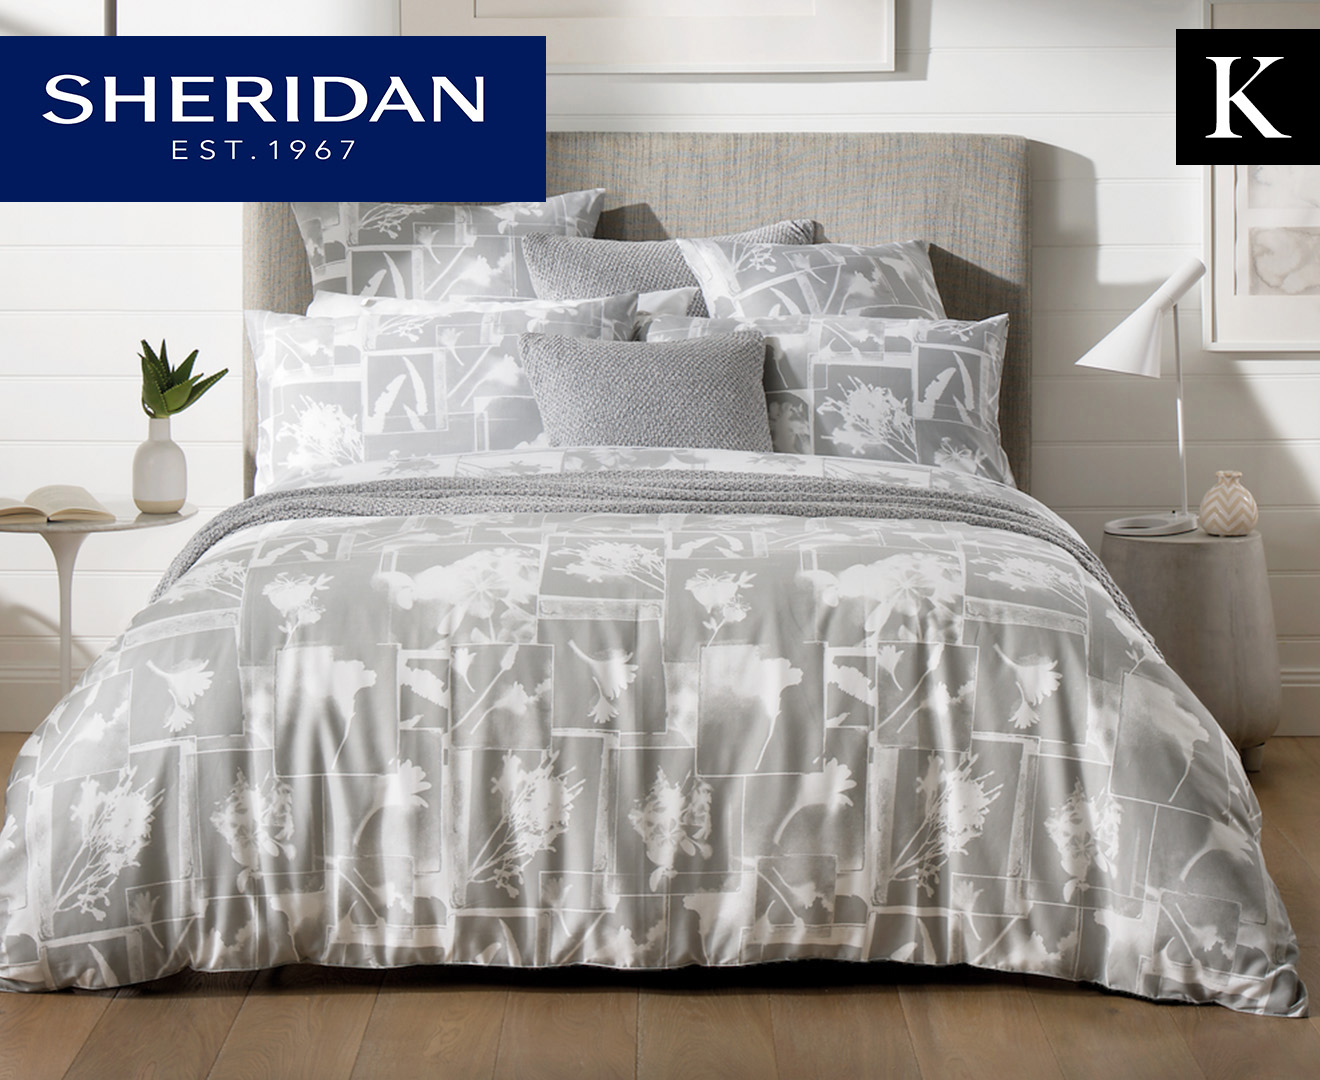 Sheridan Impressions King Bed Quilt Cover Set - Fog